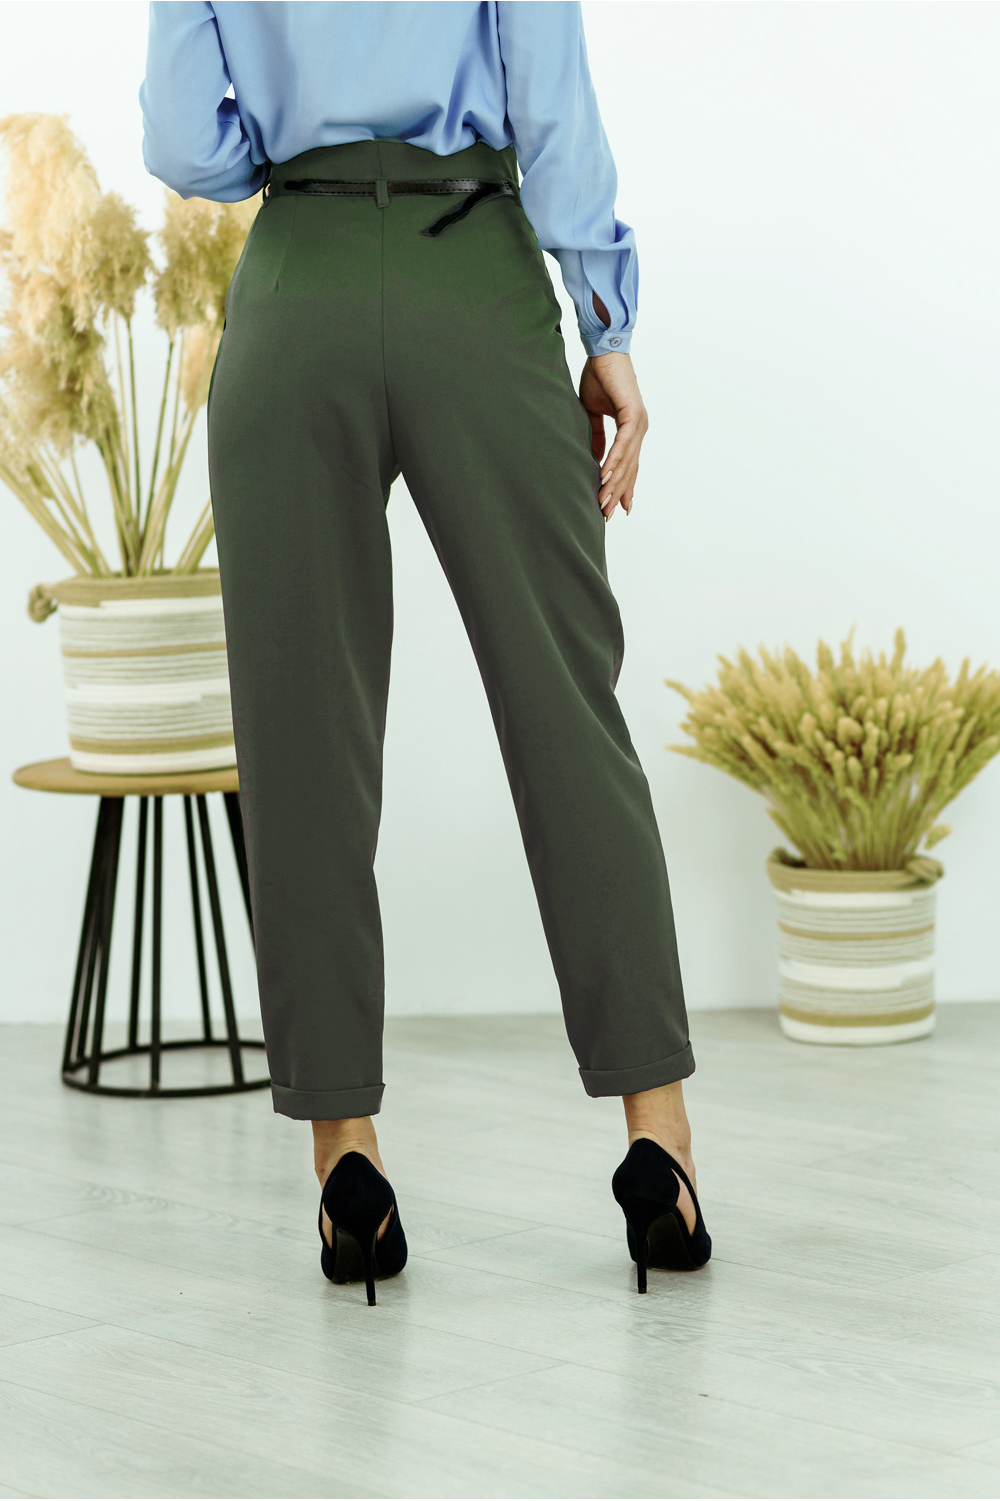 High-waisted fashion trousers